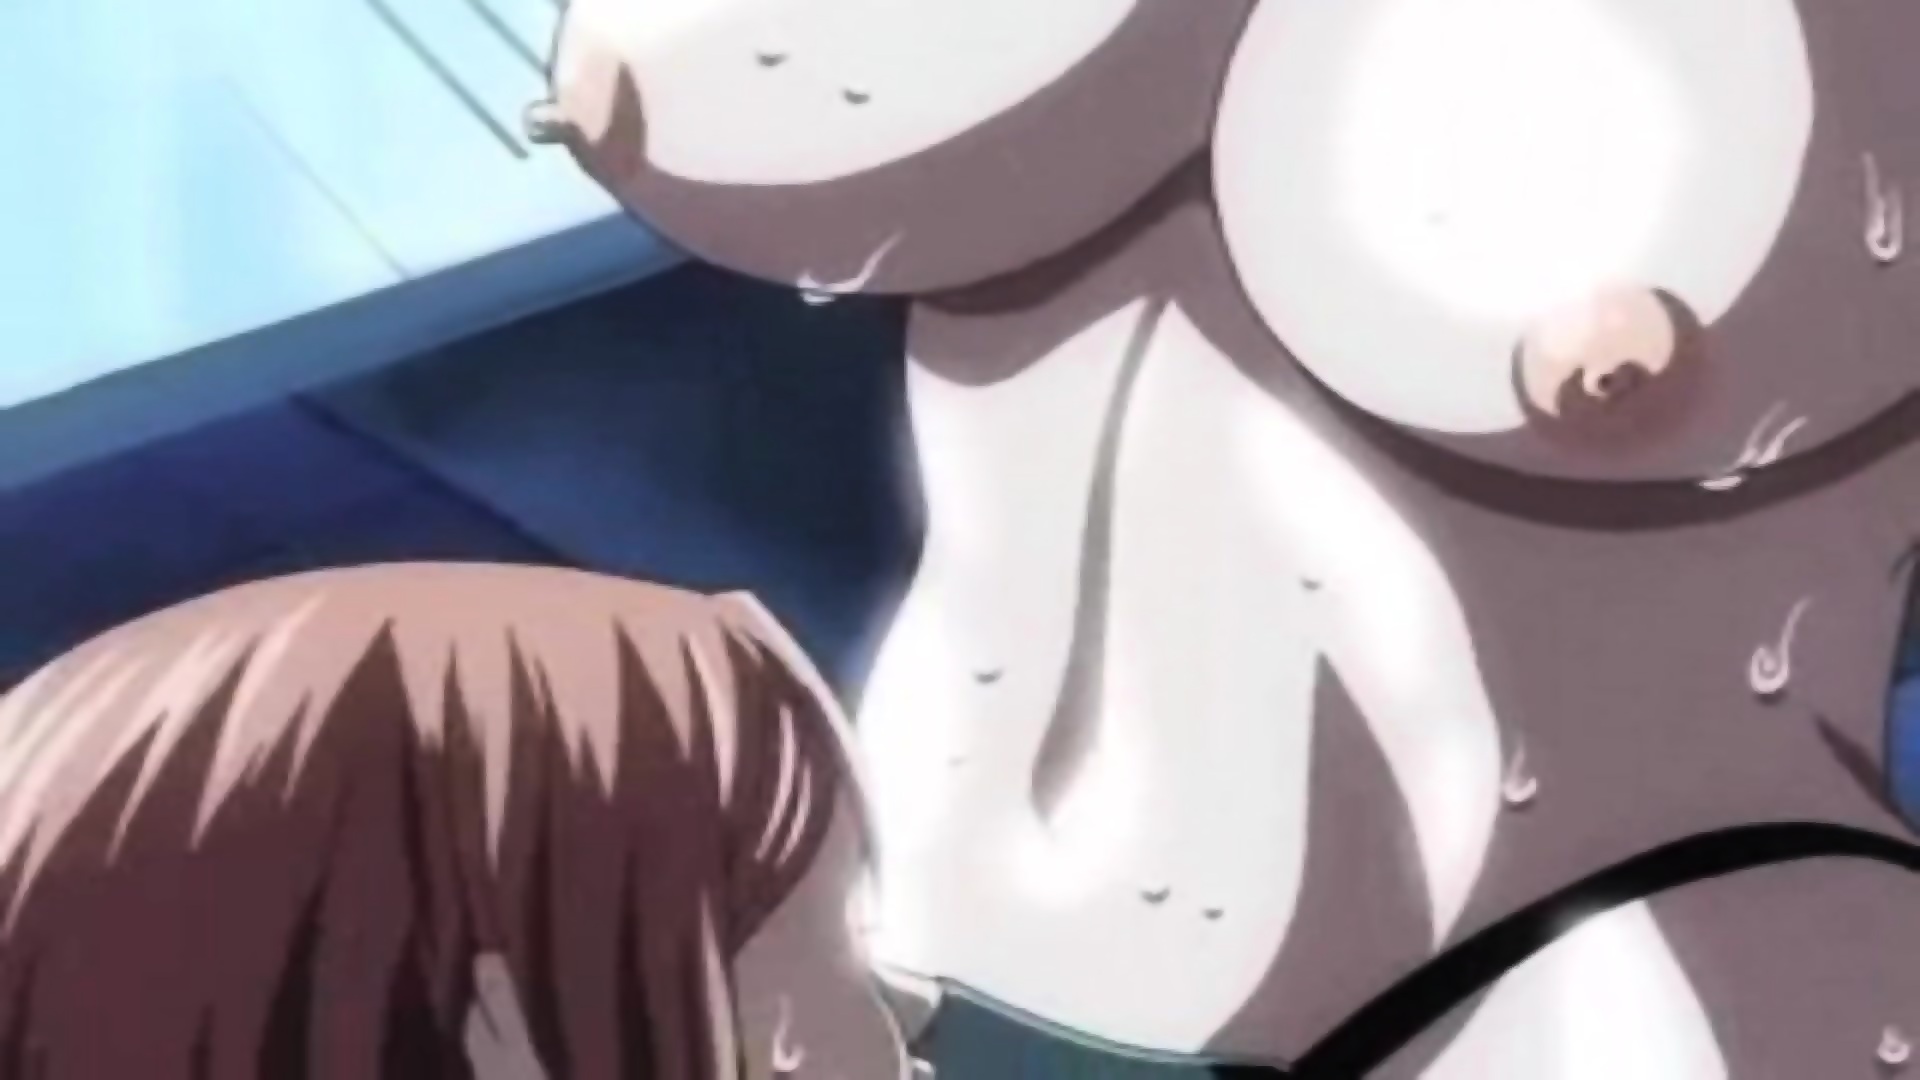 Hot Hentai Lesbian Scene - Uncensored Hentai Lesbian Anime Sex Scene HD - EPORNER